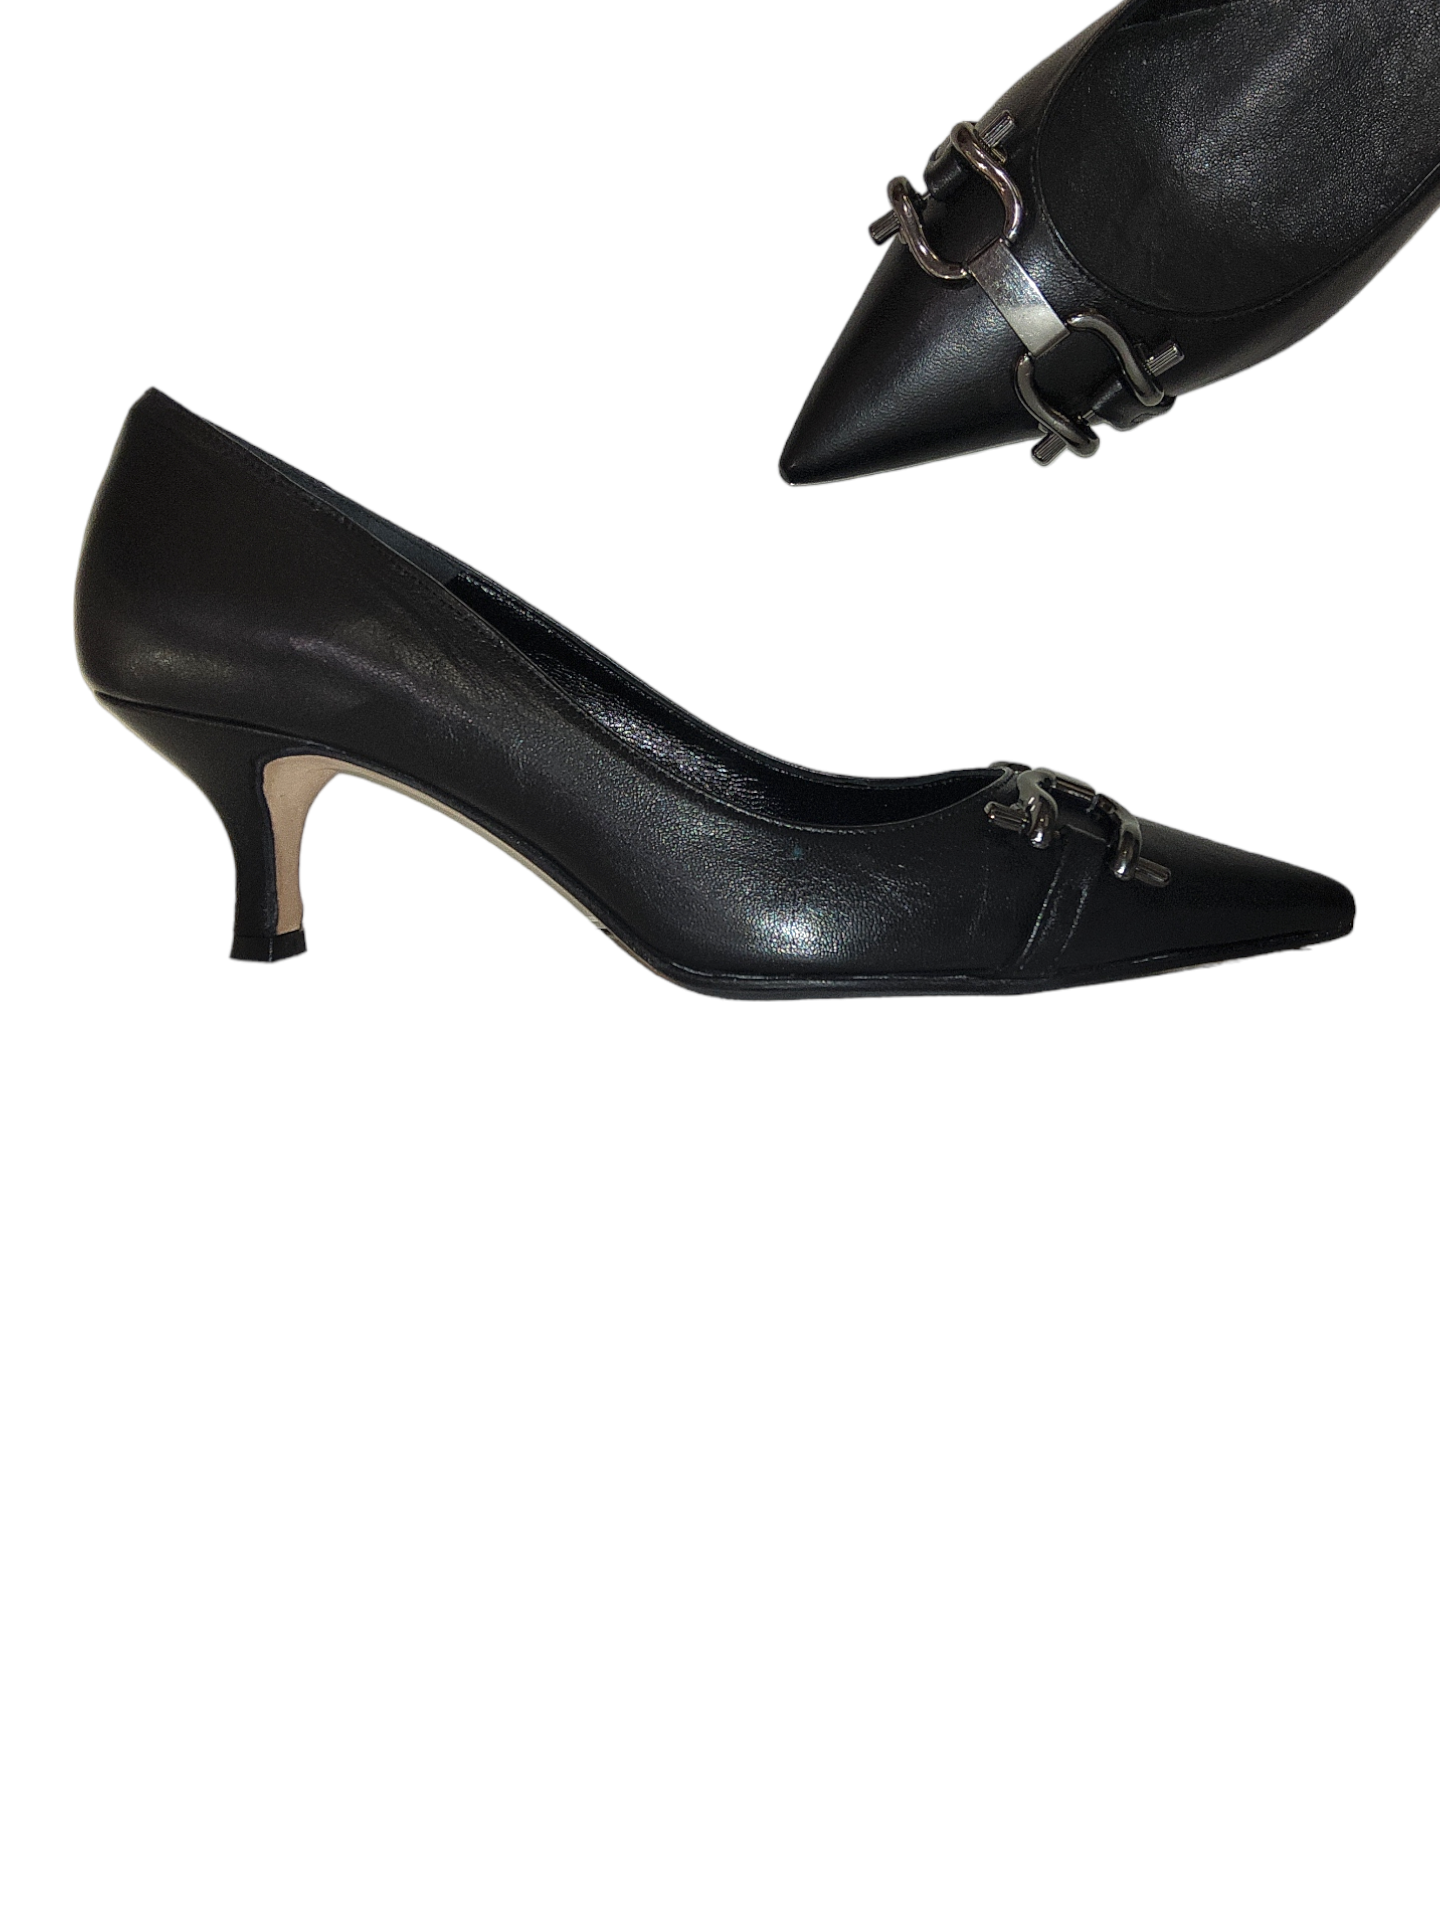 Black kitten heel shoe